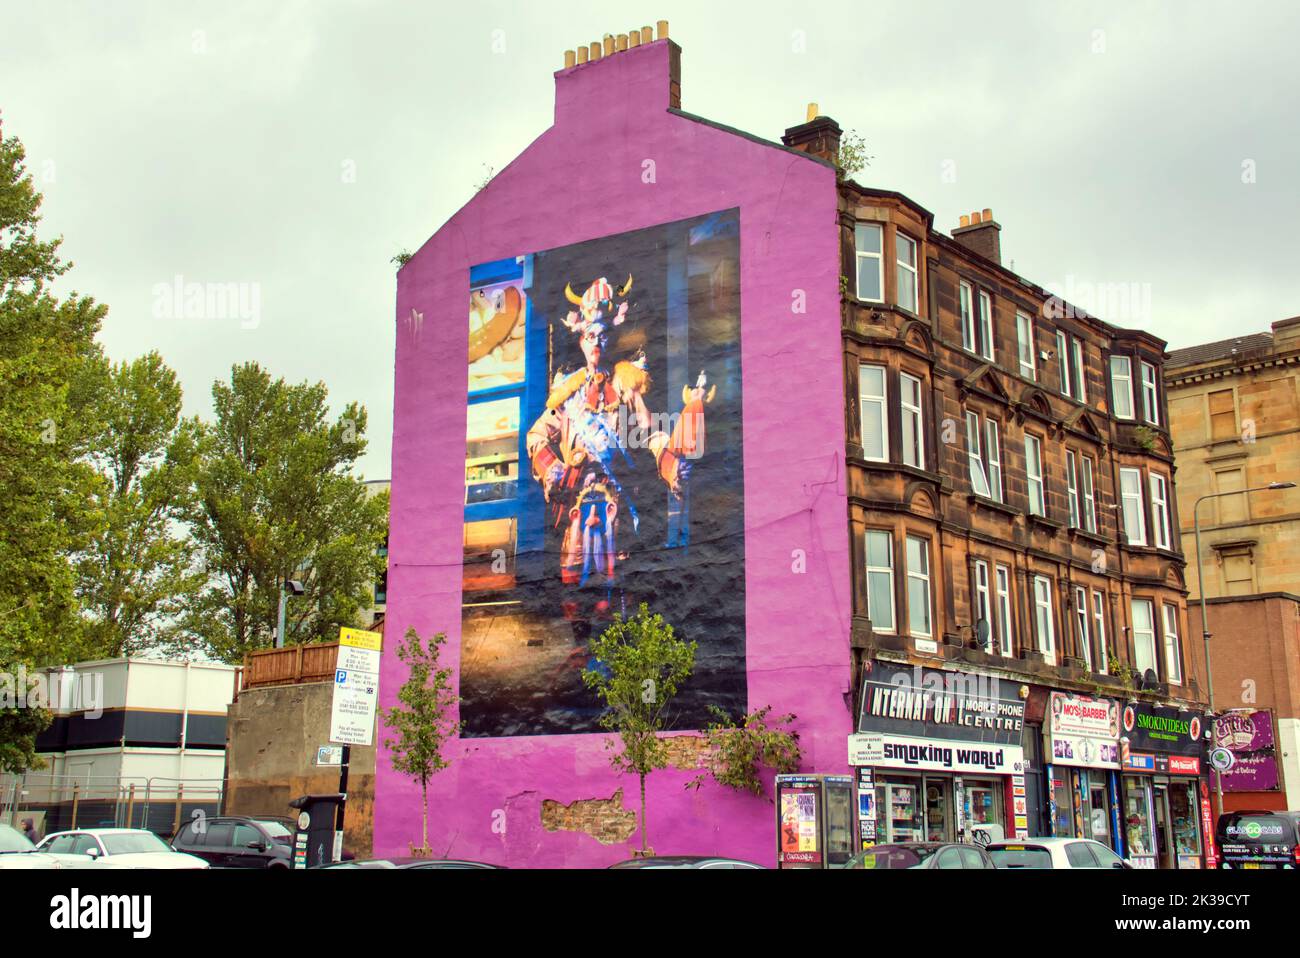 el mural de billy Connolly 'Big Yin' de Rachel Maclean está en Gallowgate cerca de Barrowland Park Glasgow, Escocia, Reino Unido Foto de stock